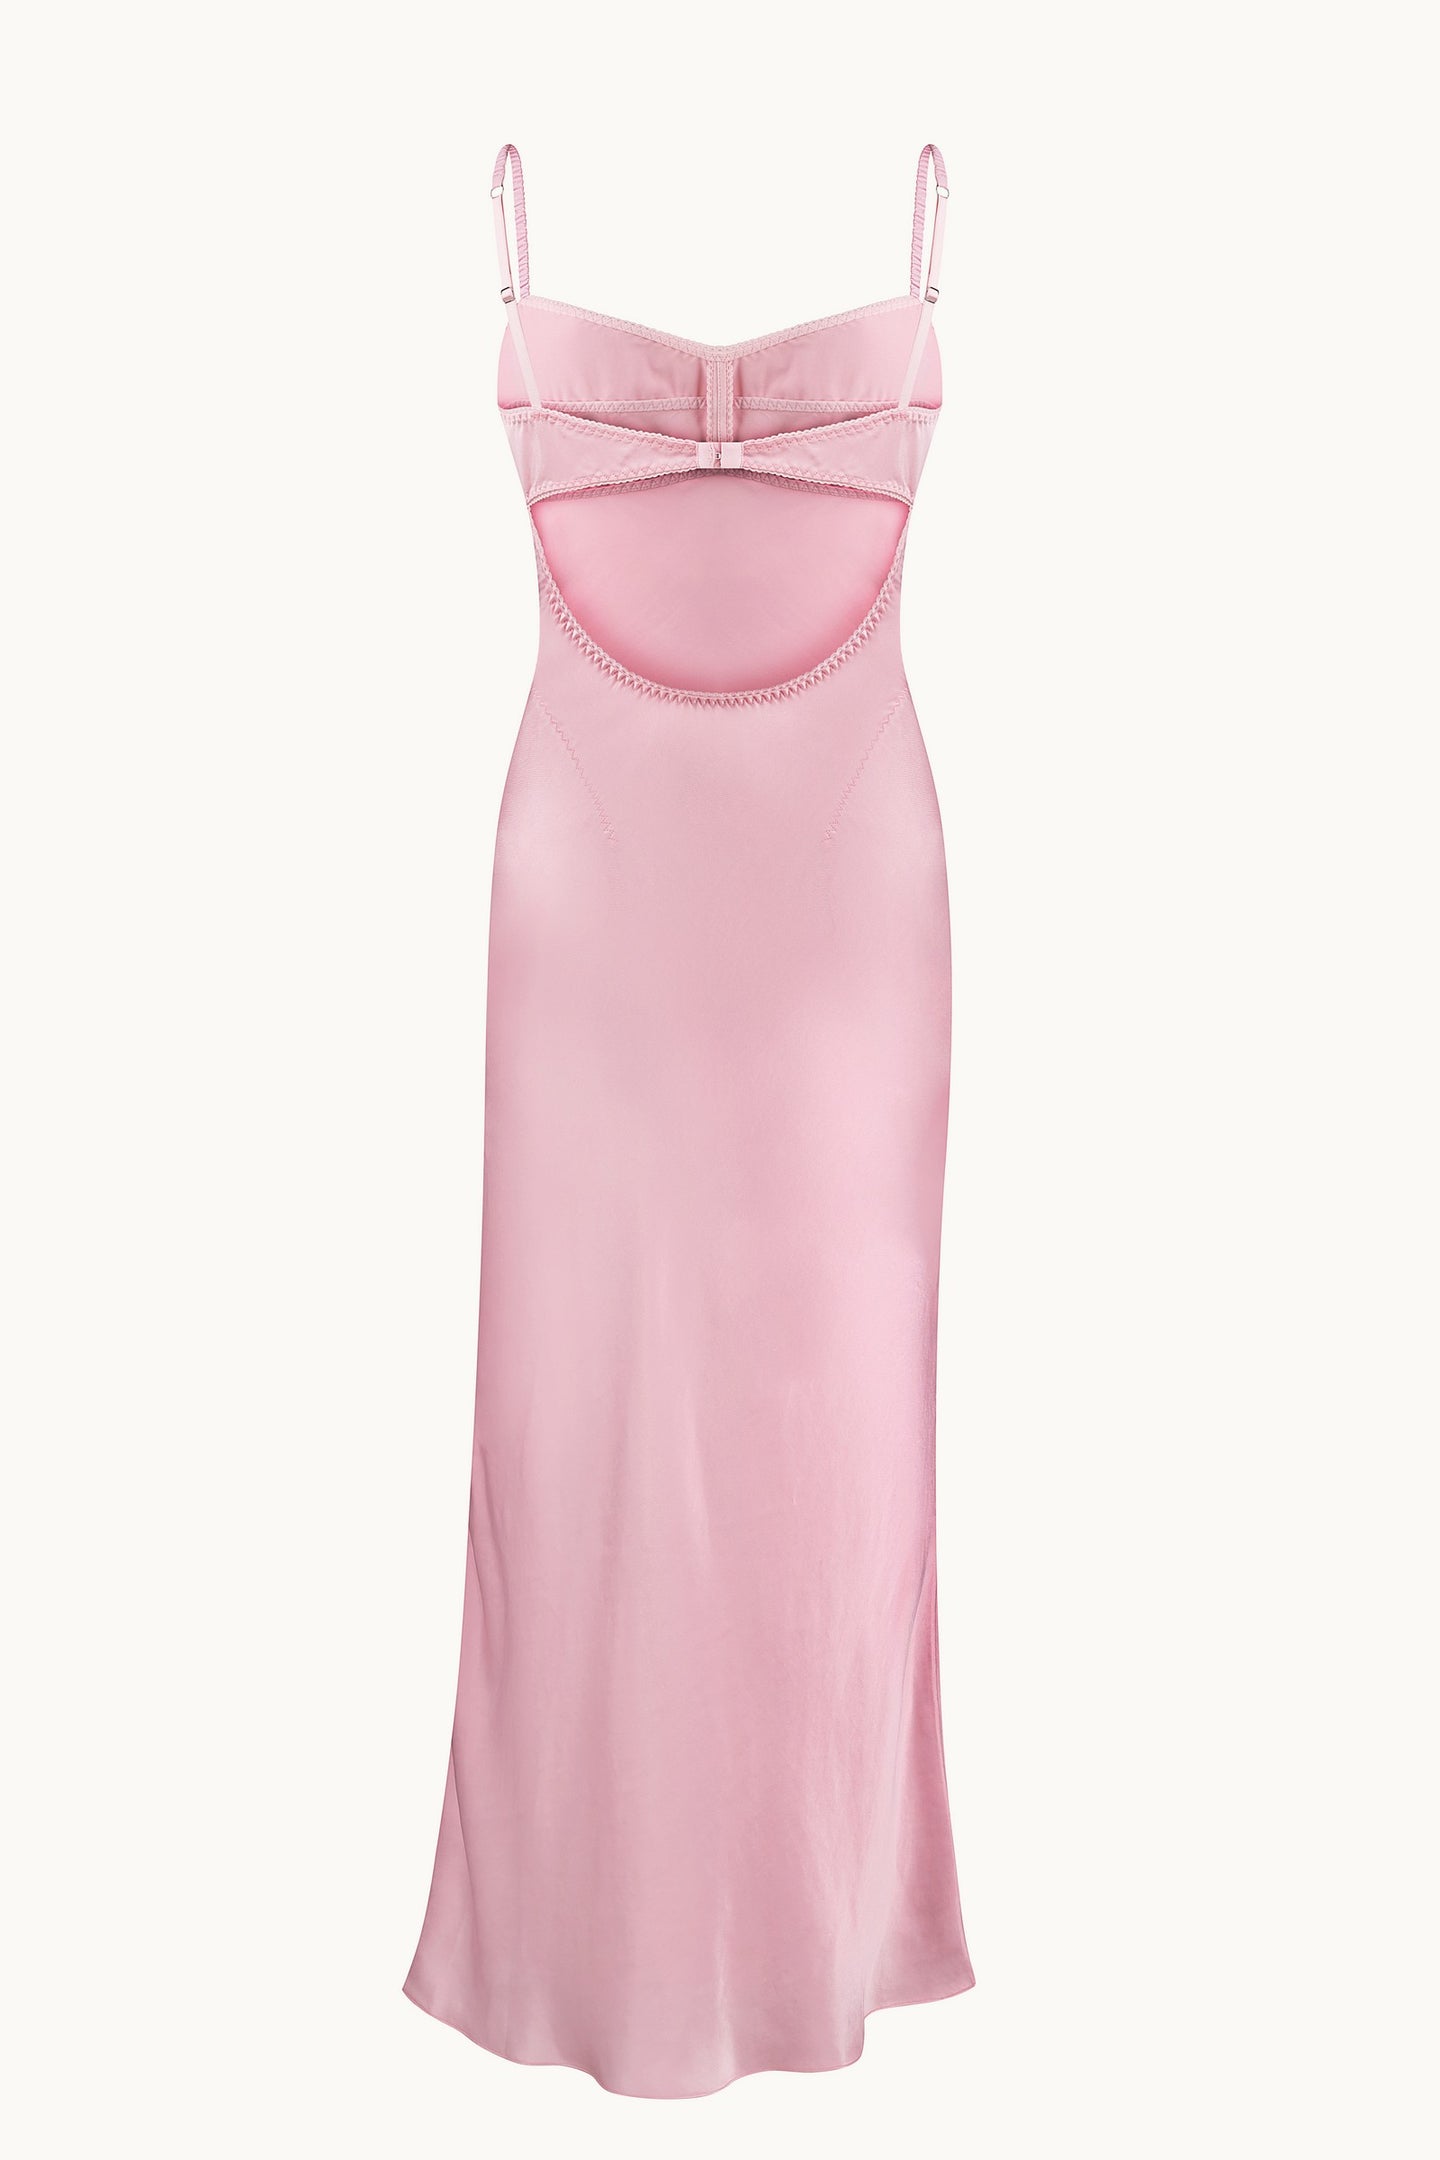 Waterlily pink dress back view